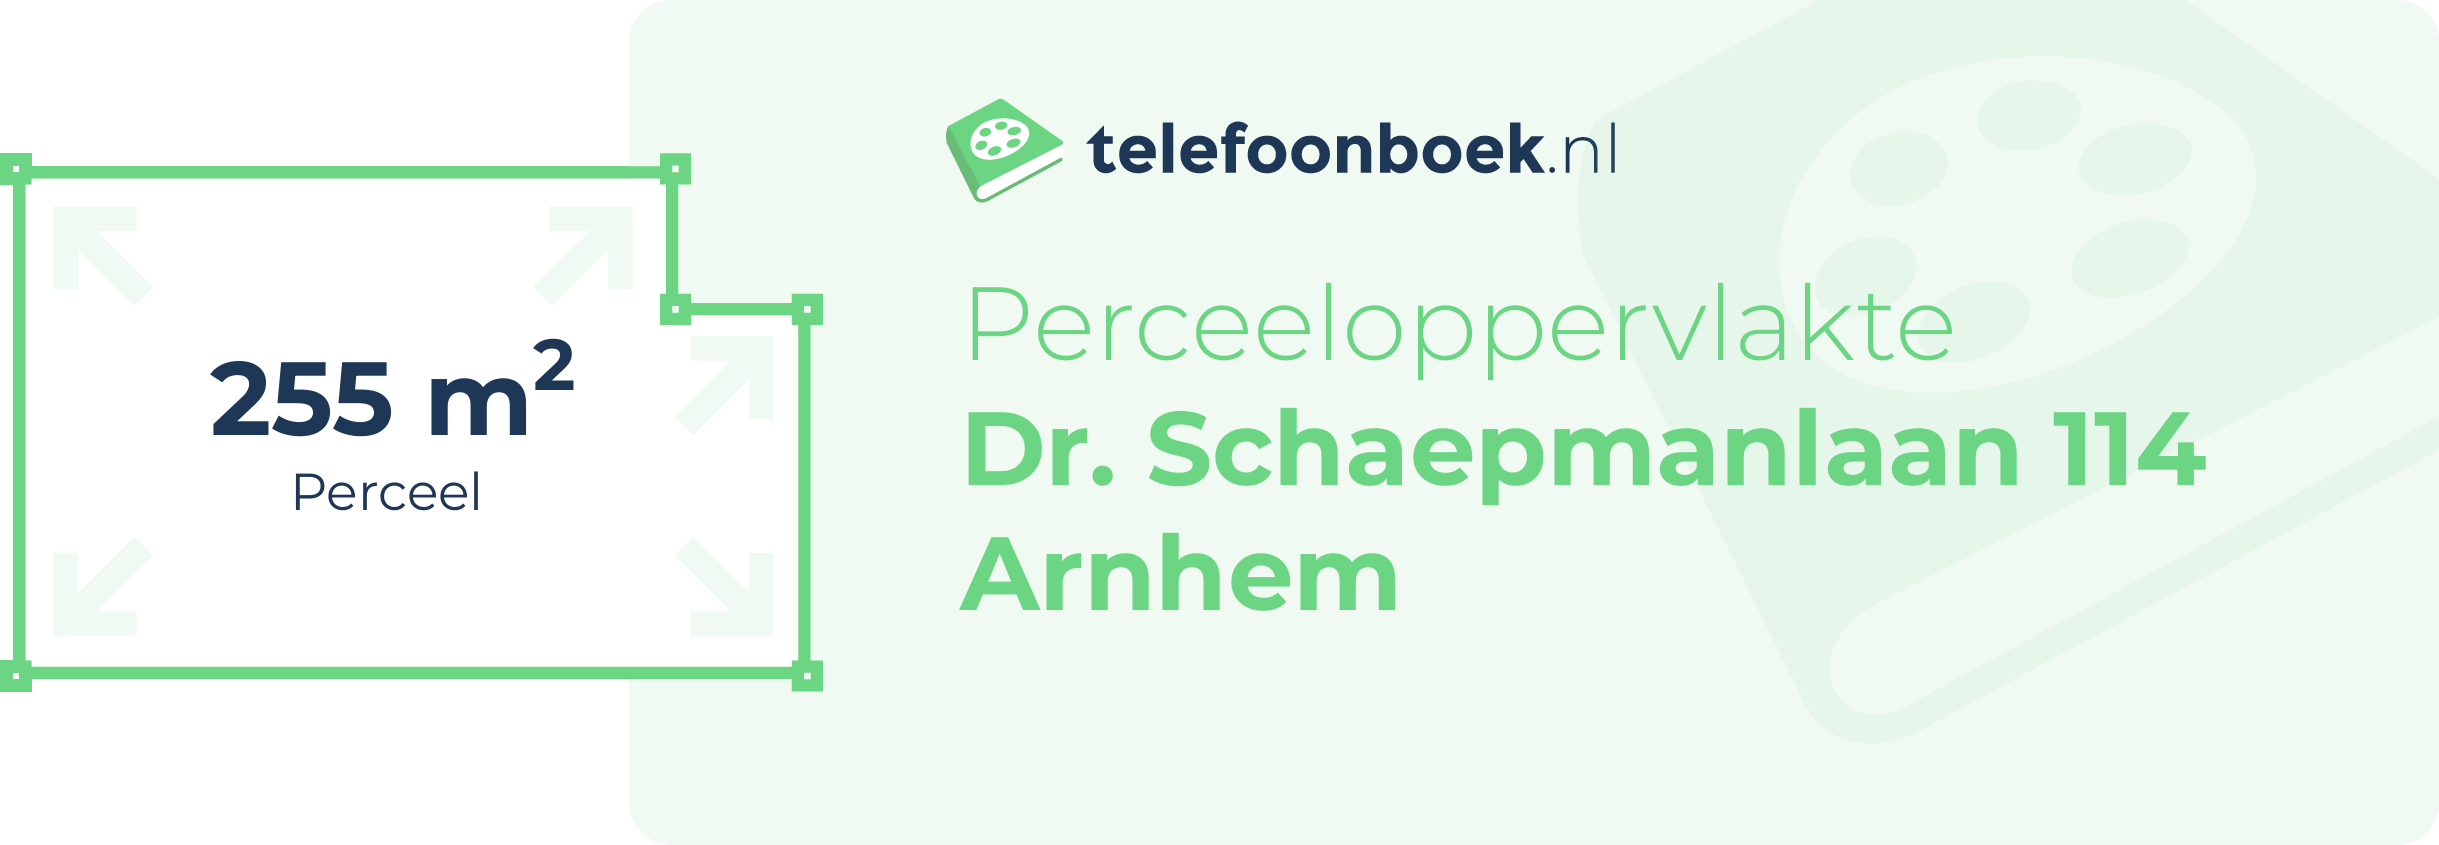 Perceeloppervlakte Dr. Schaepmanlaan 114 Arnhem